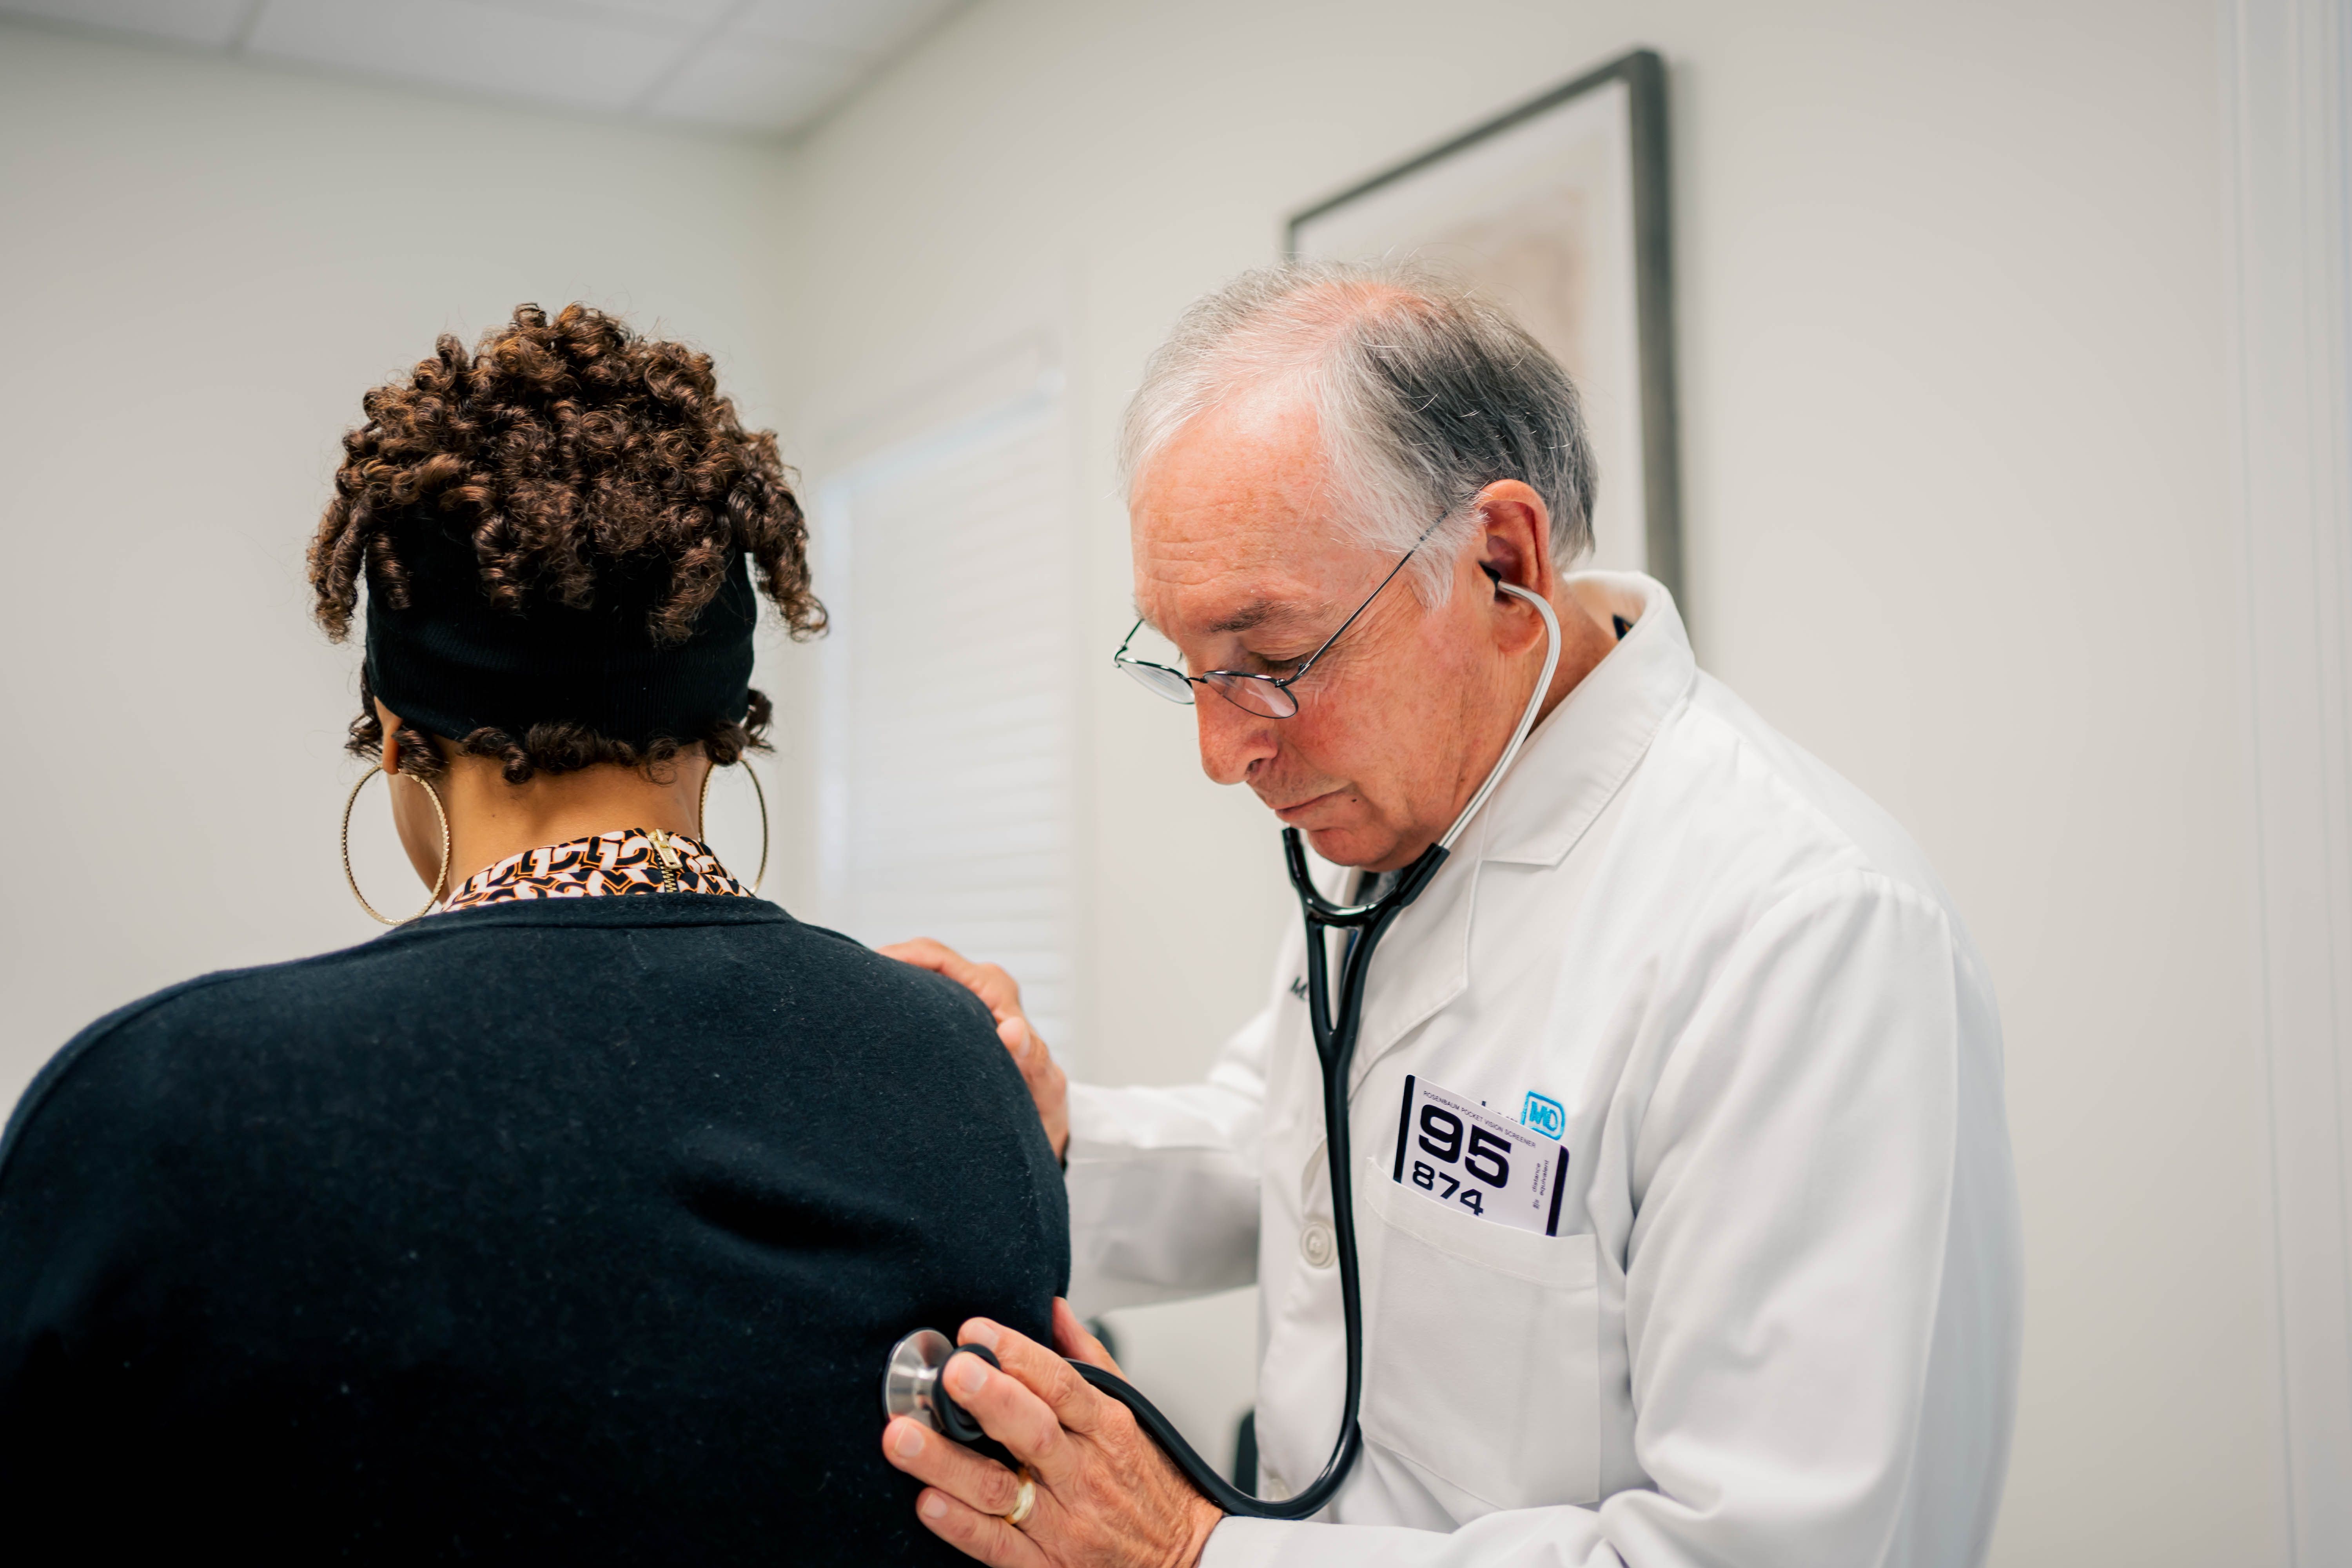 Dr. Jack Durham, PartnerMD Greenville concierge doctor, listens to a patient